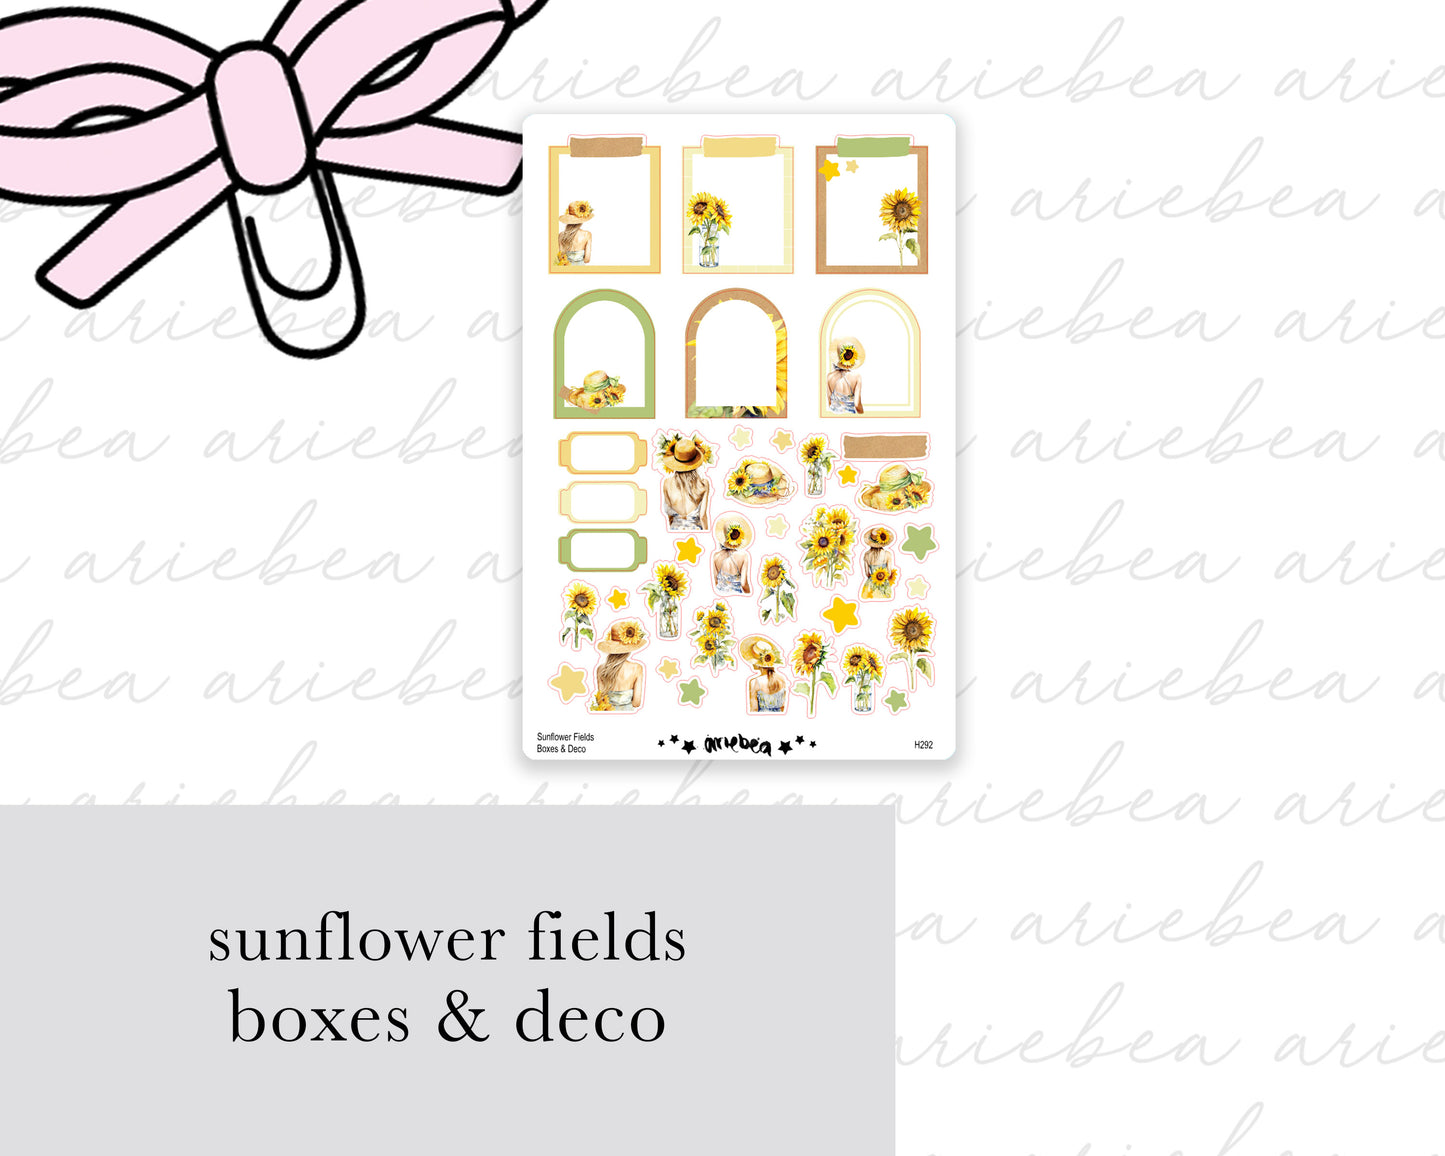 Sunflower Fields Boxes & Deco